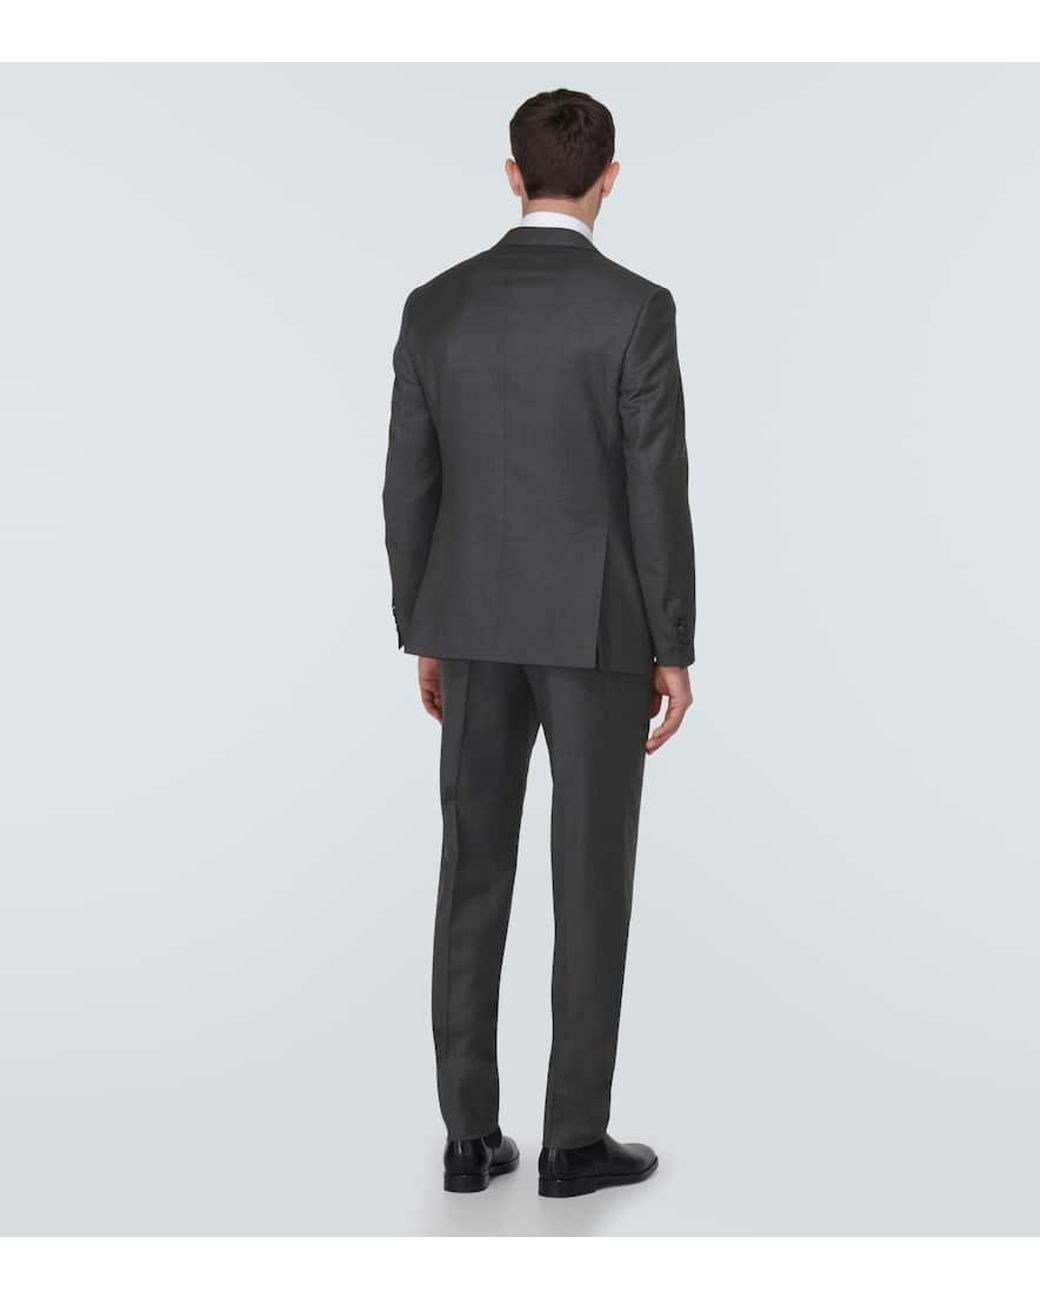 Help Identifying this Brioni Suit | Styleforum